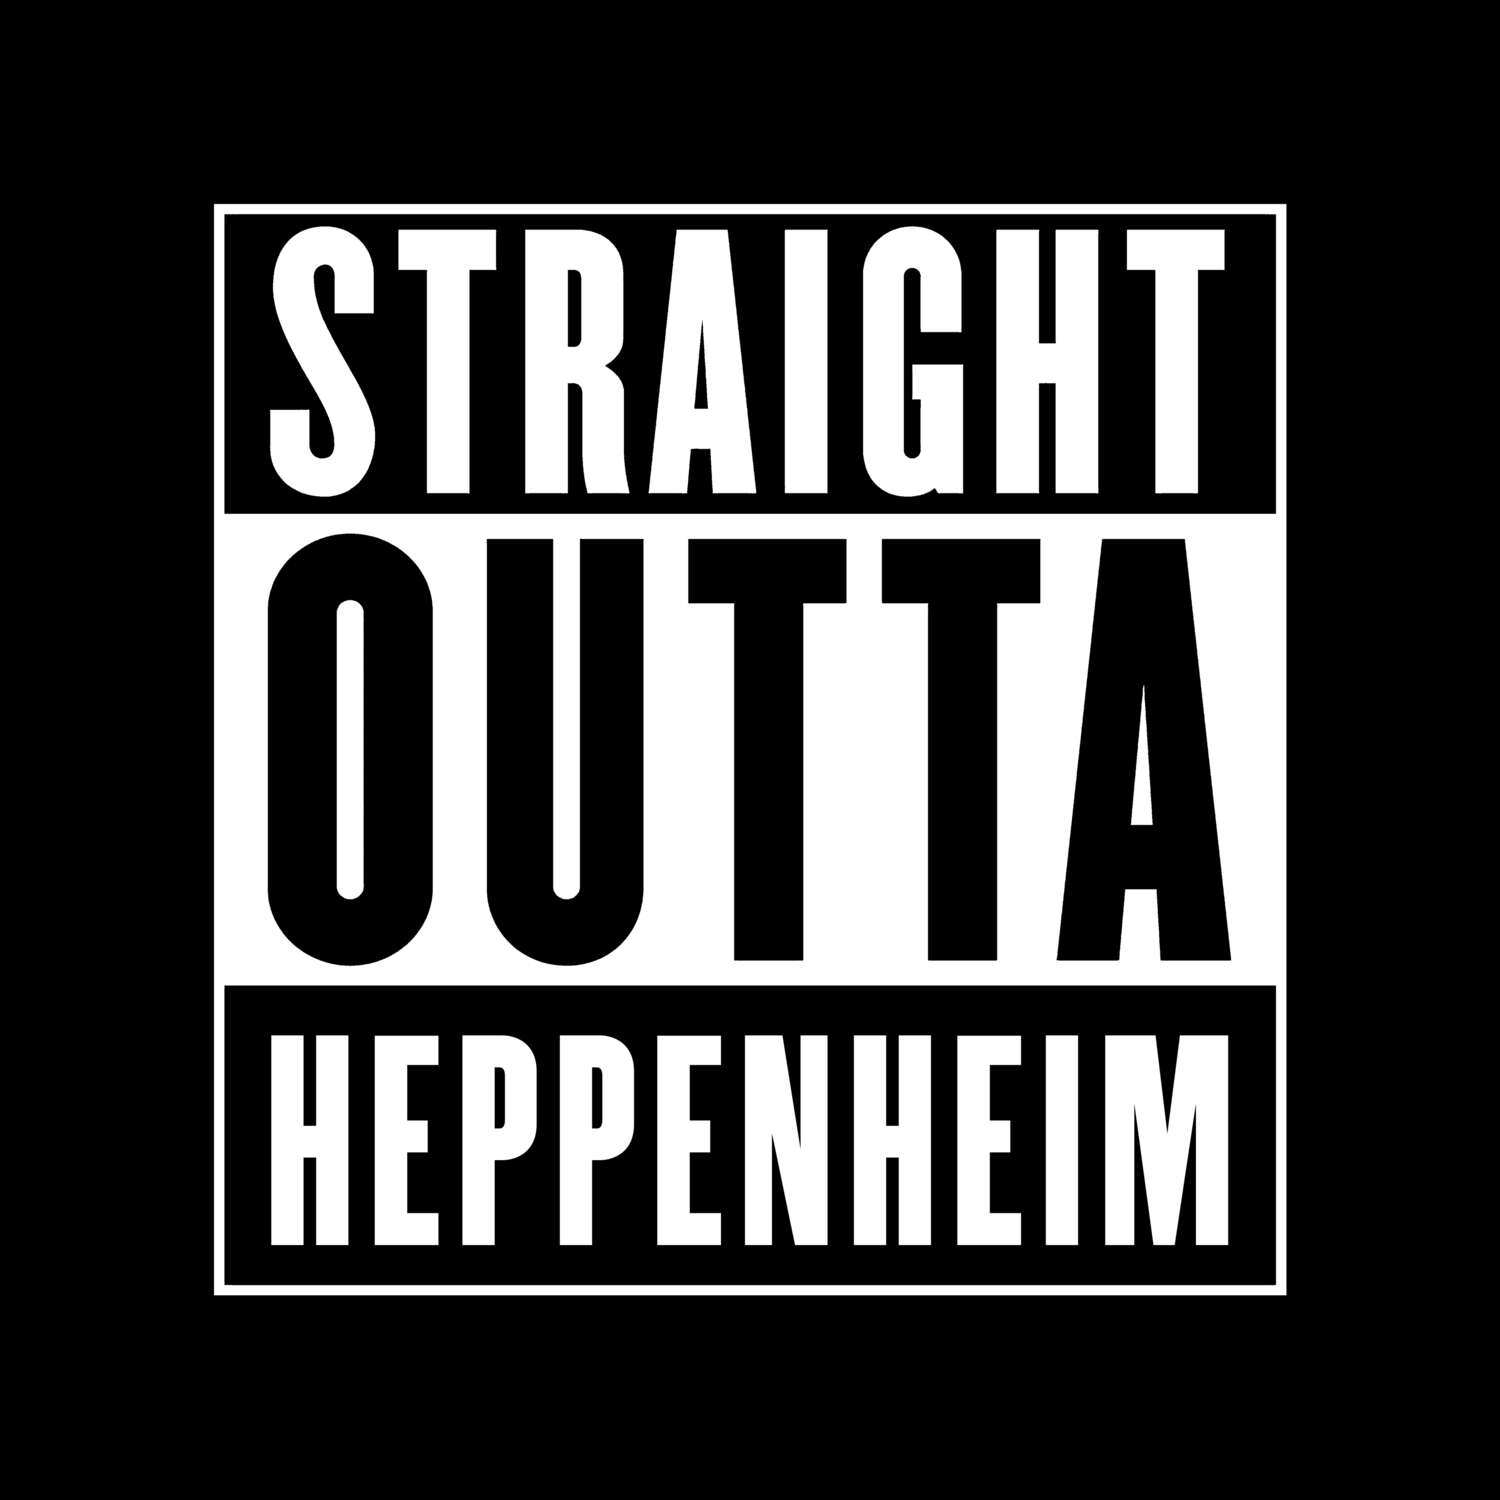 Heppenheim T-Shirt »Straight Outta«